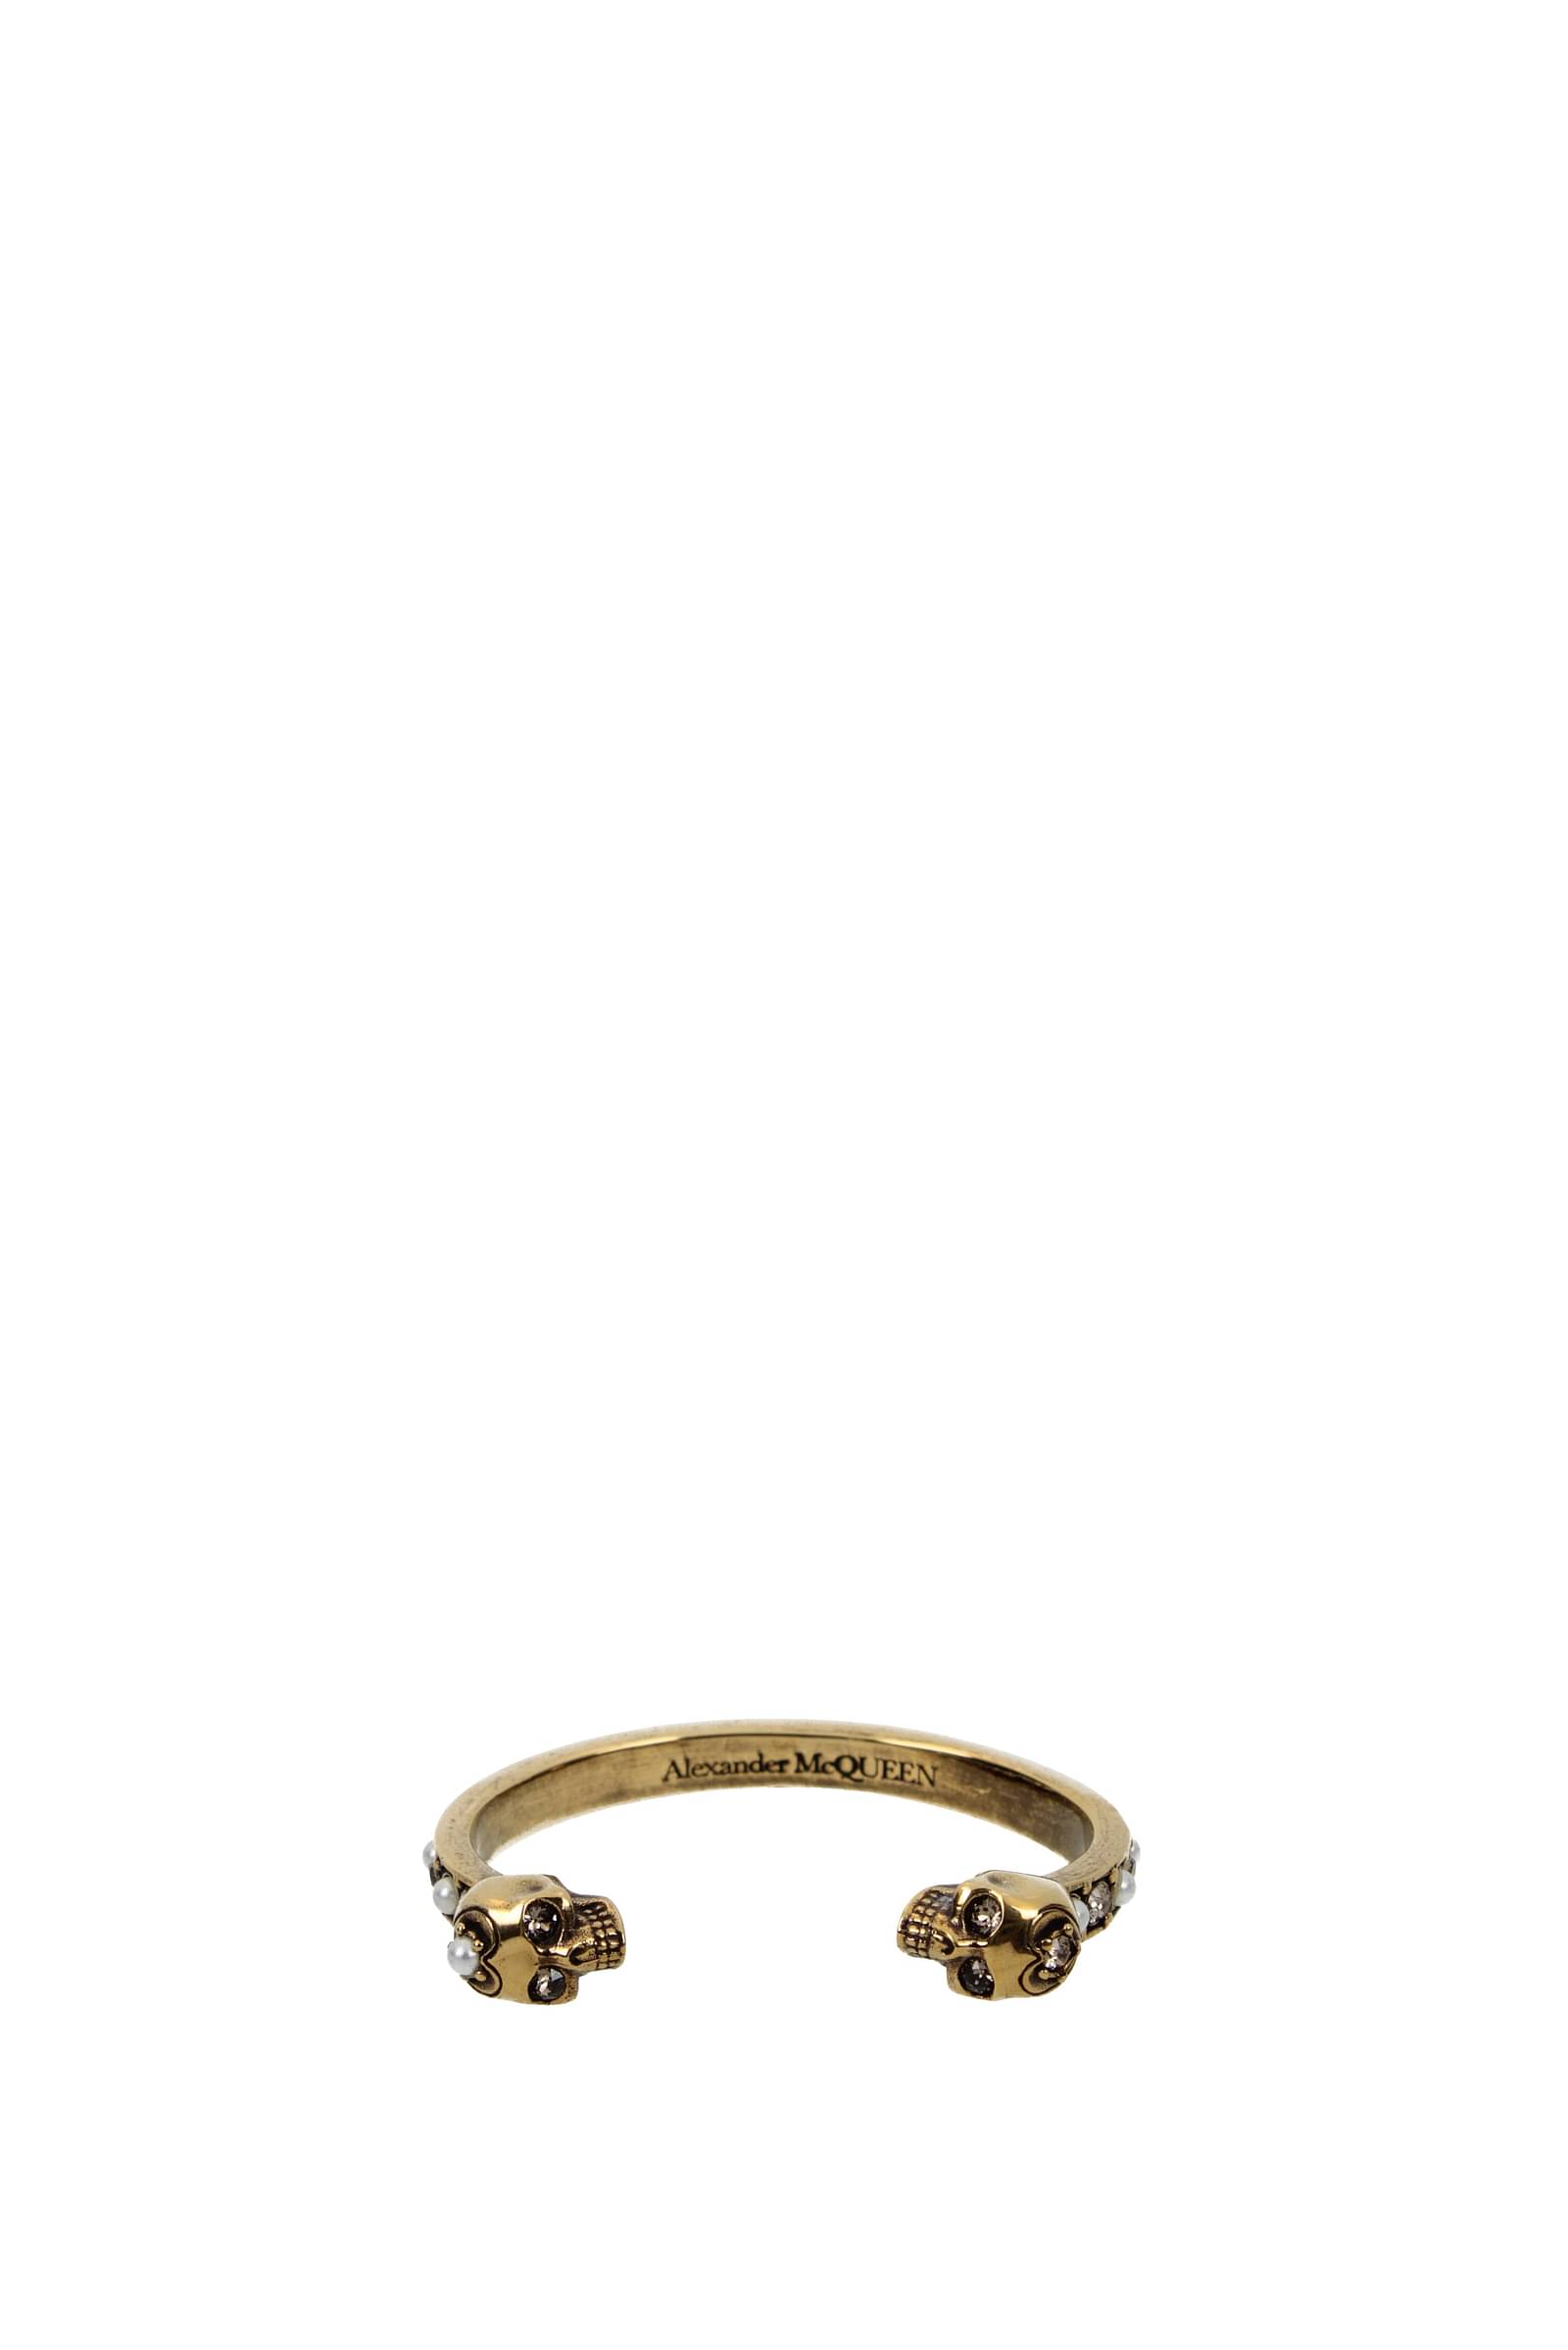 $465 Skull snake-effect Alexander McQueen leather wrap bracelet Gold  Crystals. | eBay